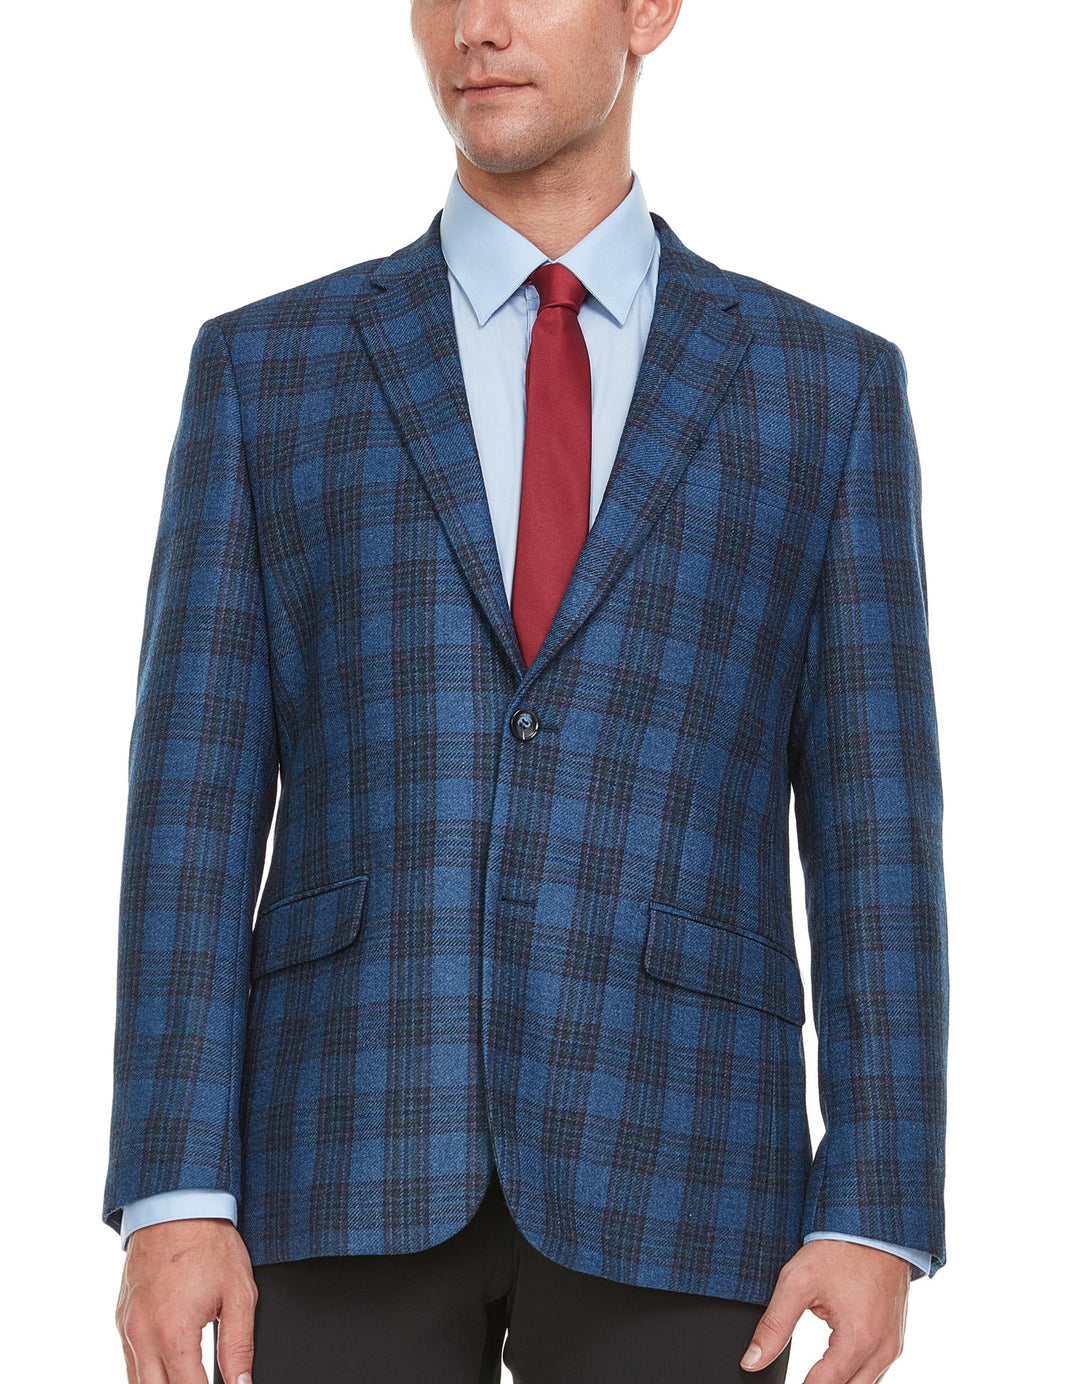 Adam Baker Men's Single Breasted 100% Wool Ultra Slim Fit Blazer/Sport Coat - Blue Heather Plaid